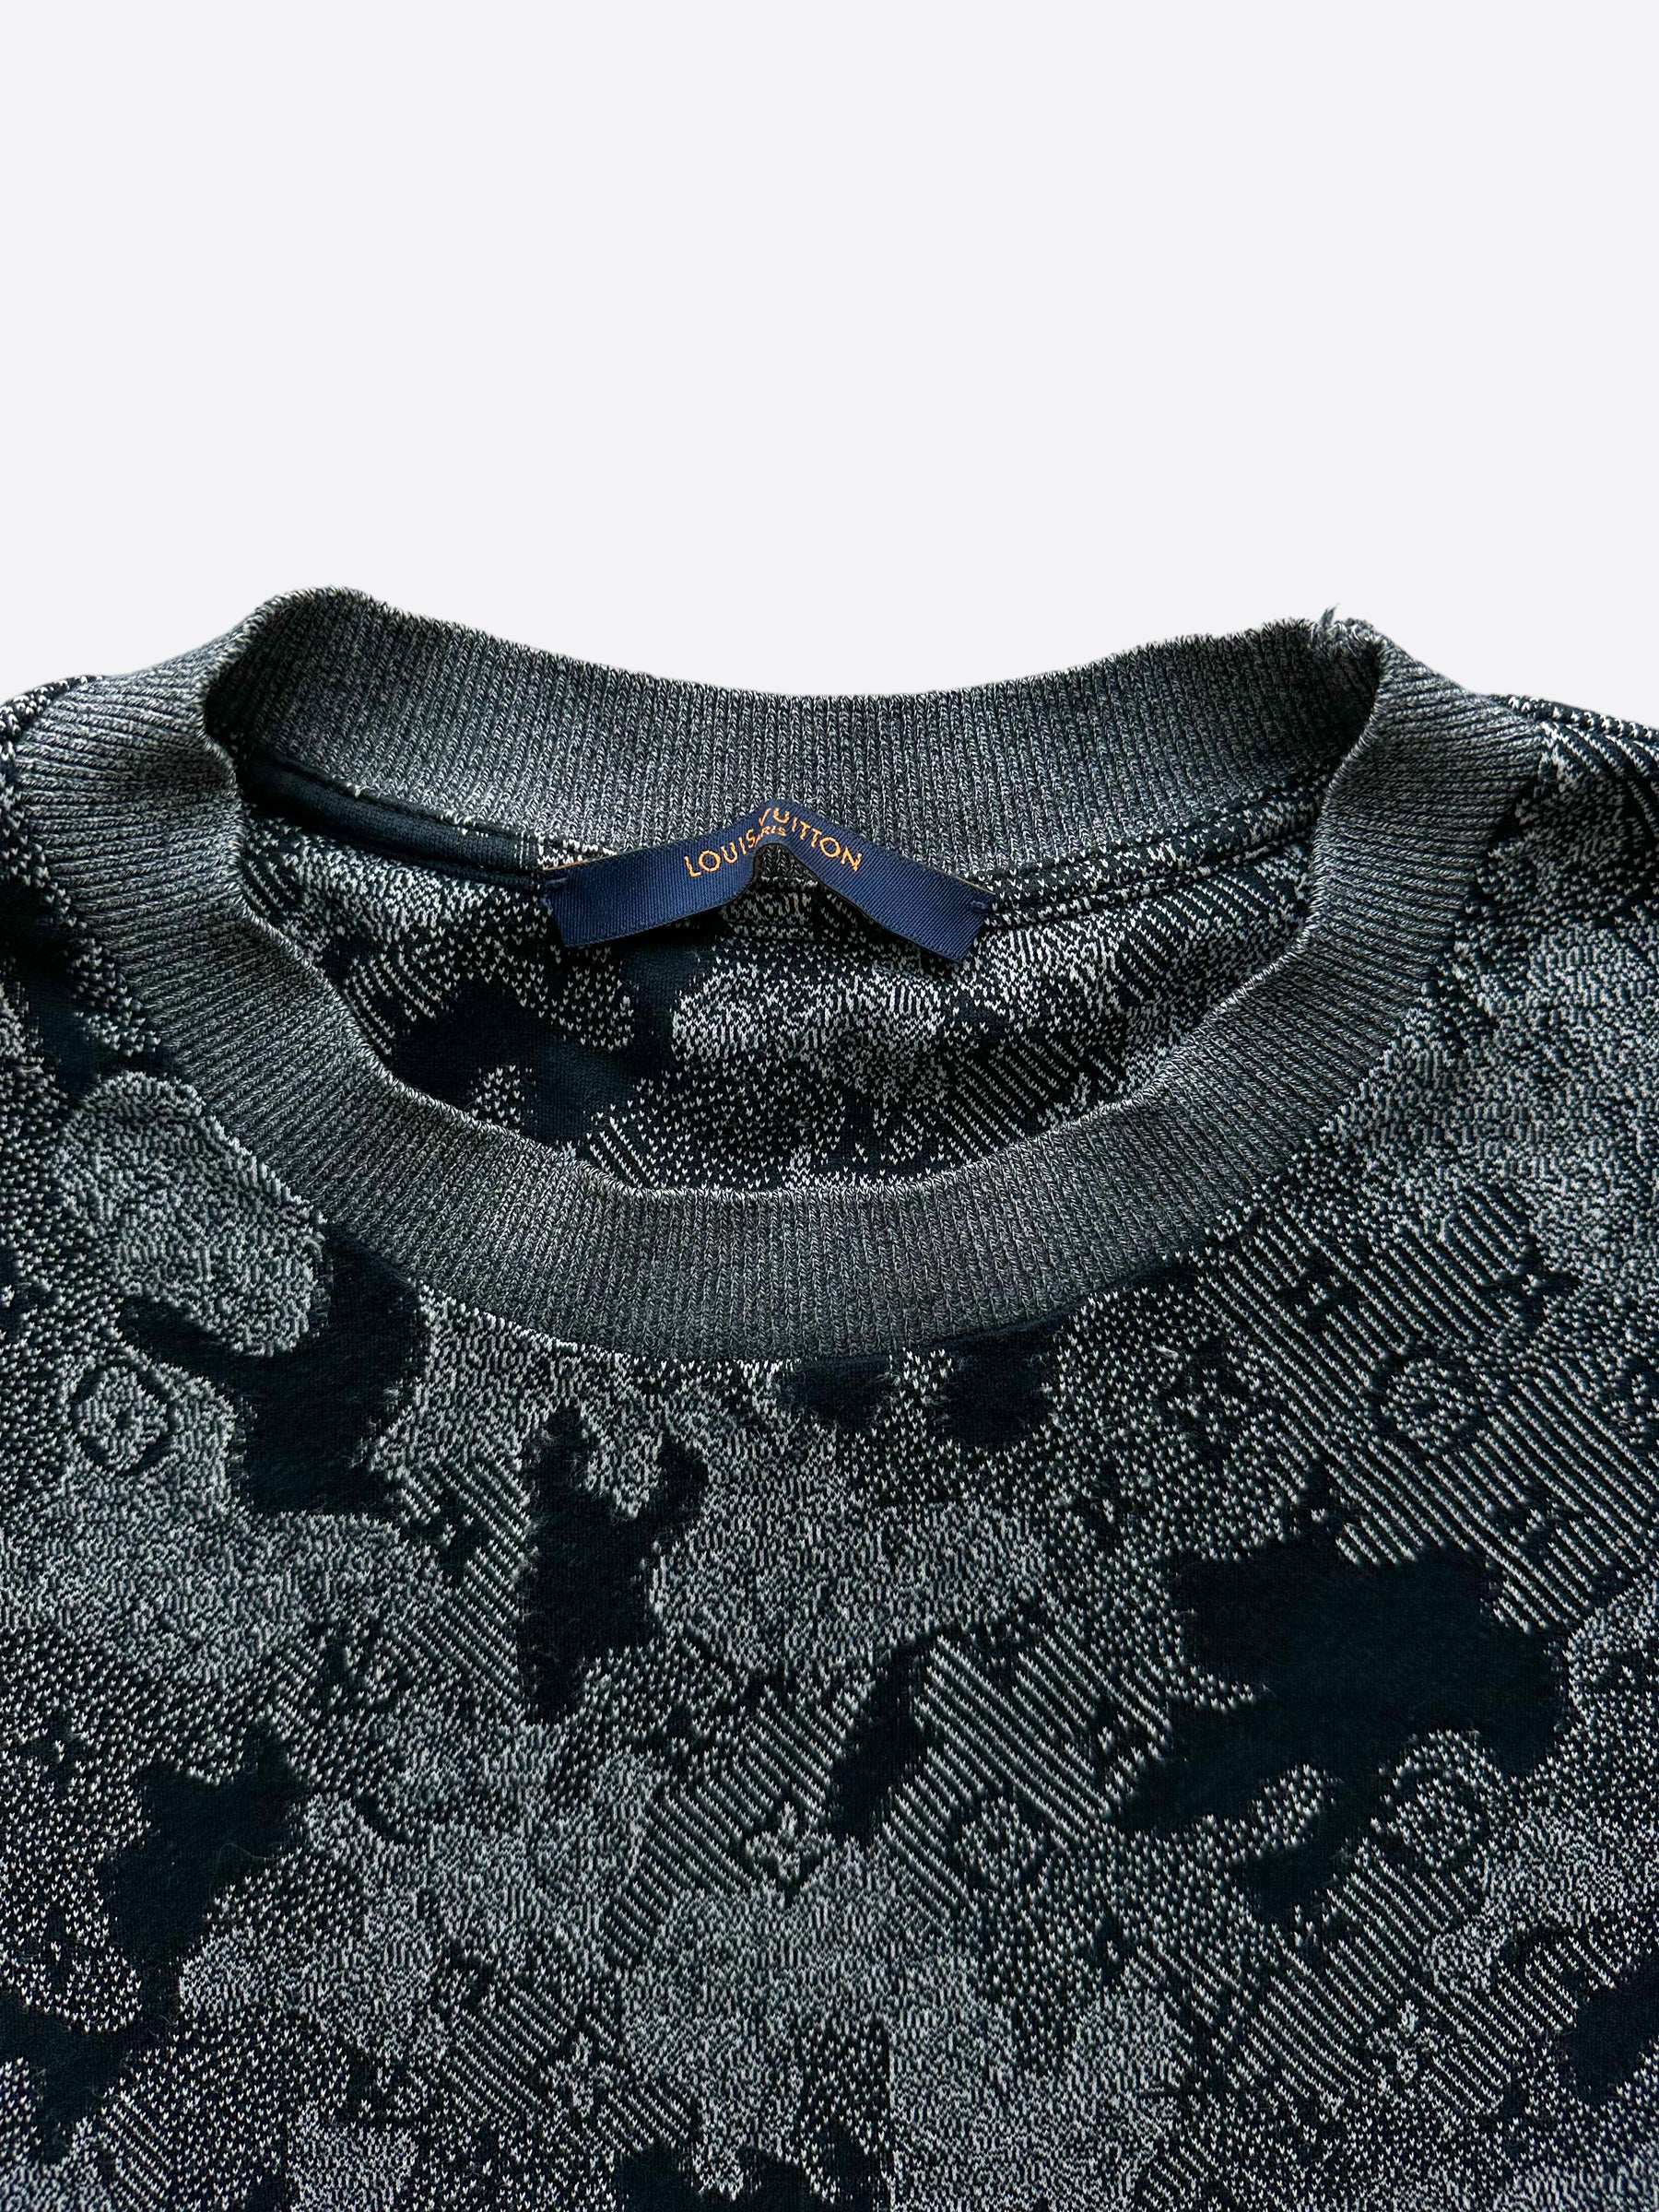 Louis Vuitton Monogram Camouflage Sweater - Tagotee